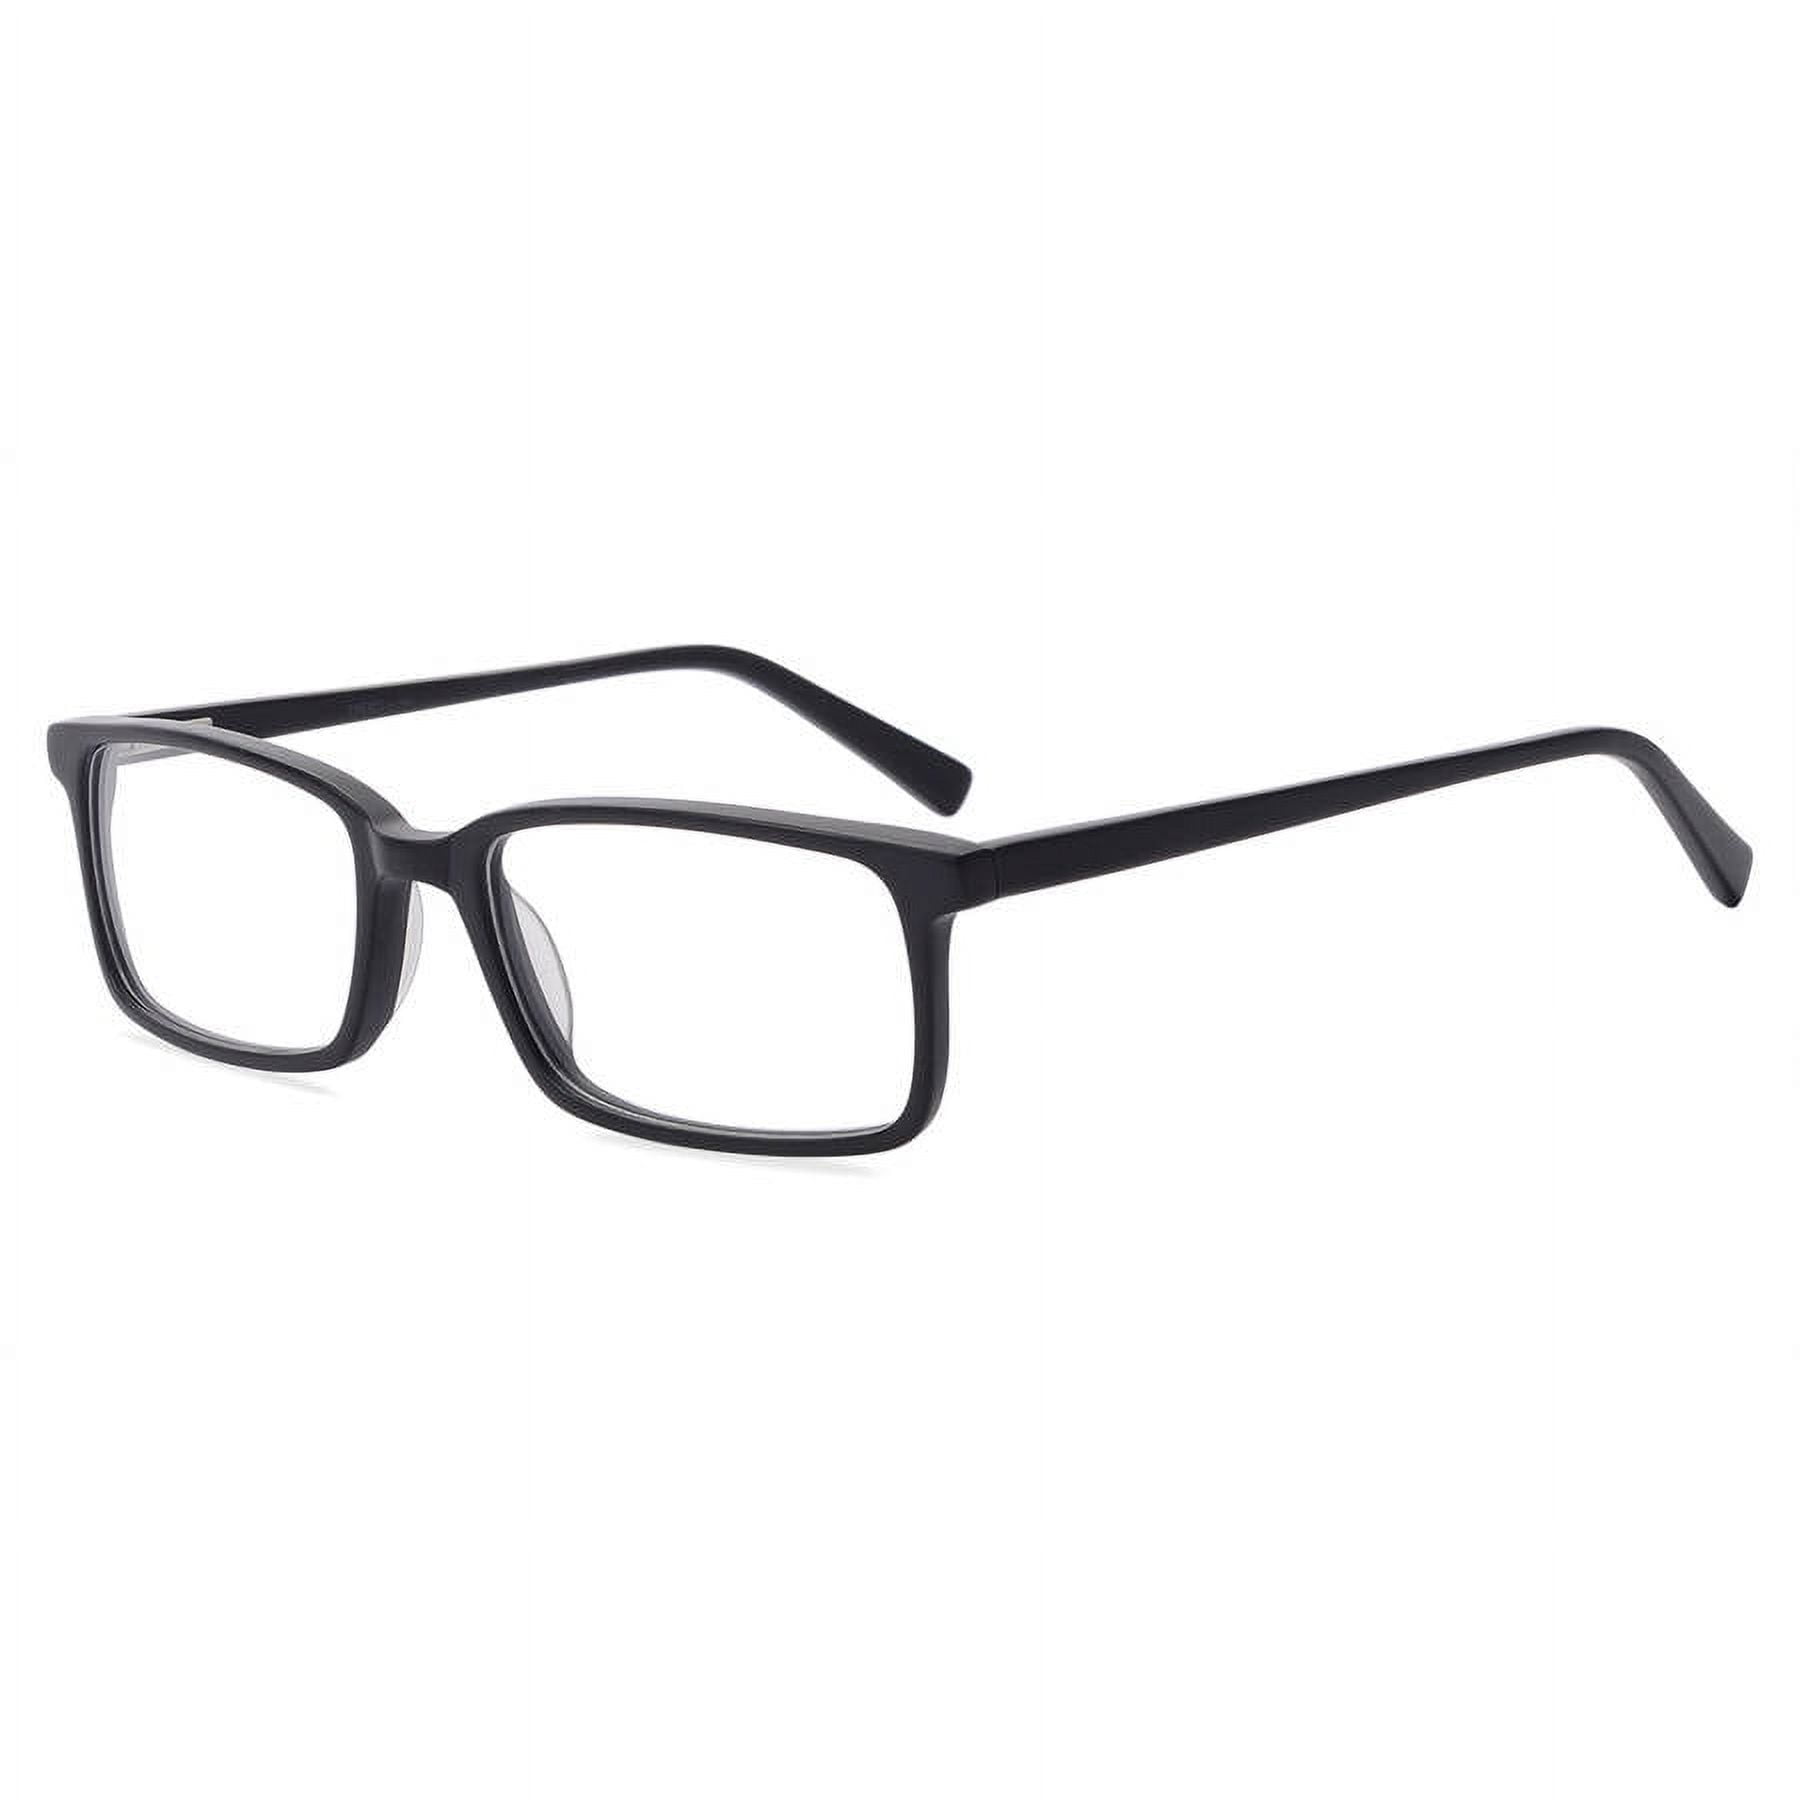 Trend by DNA Men's A4002 Black Eyeglass Frames - Walmart.com